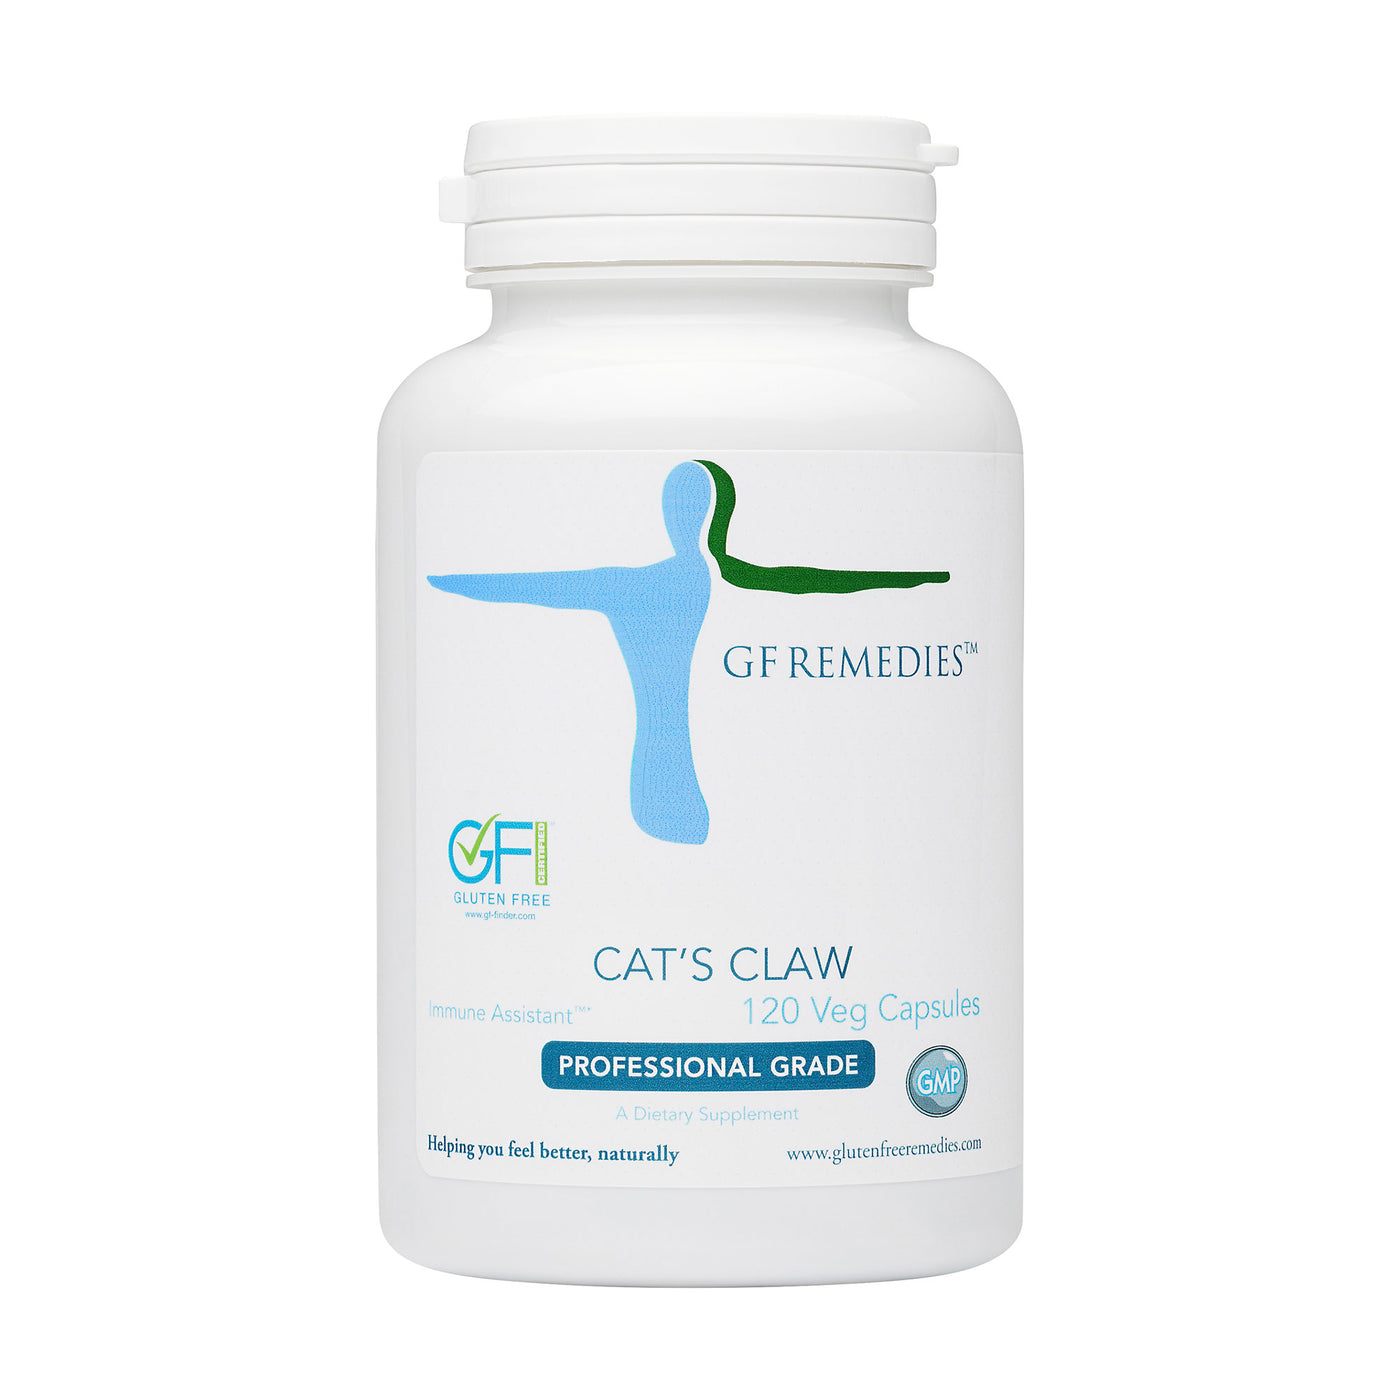 Gluten Free Remedies Cat's Claw bottle